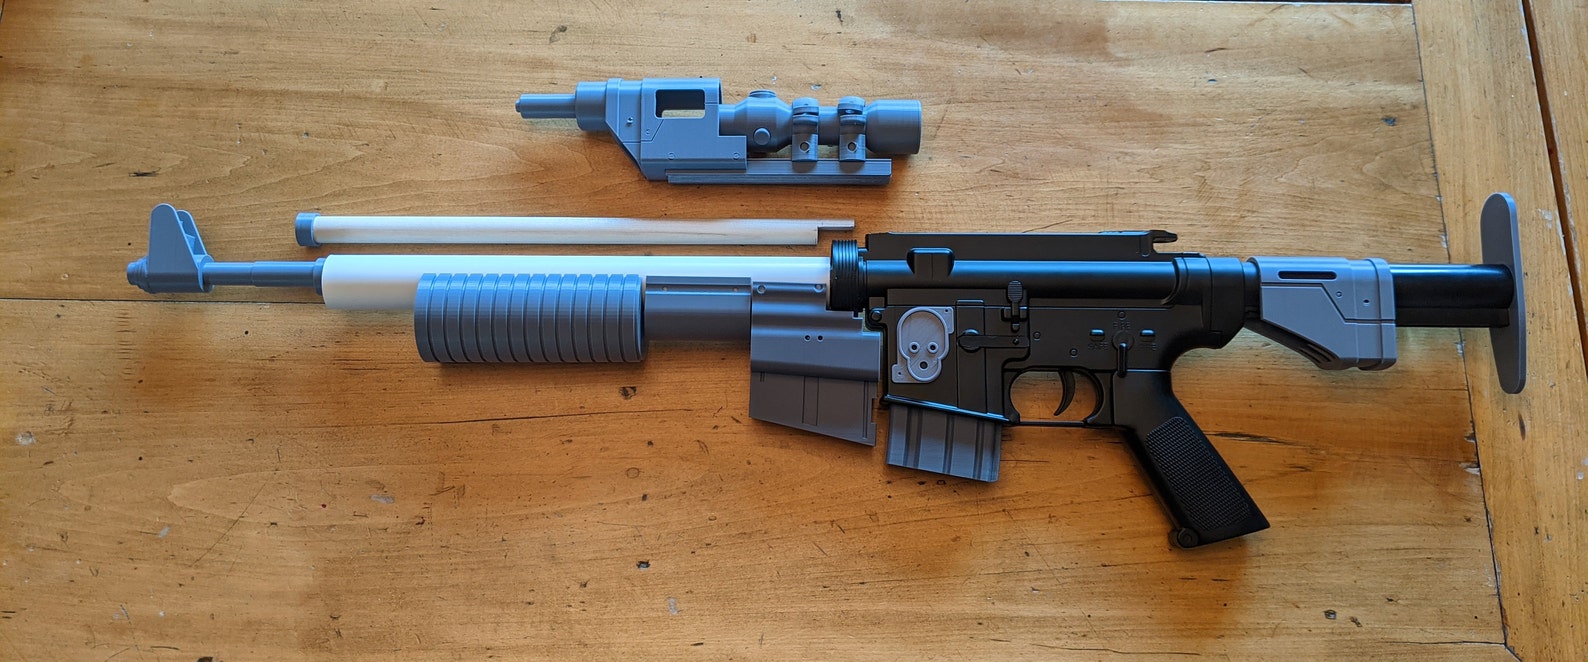 A280 Endor Rebel Blaster Rifle Kit | Etsy